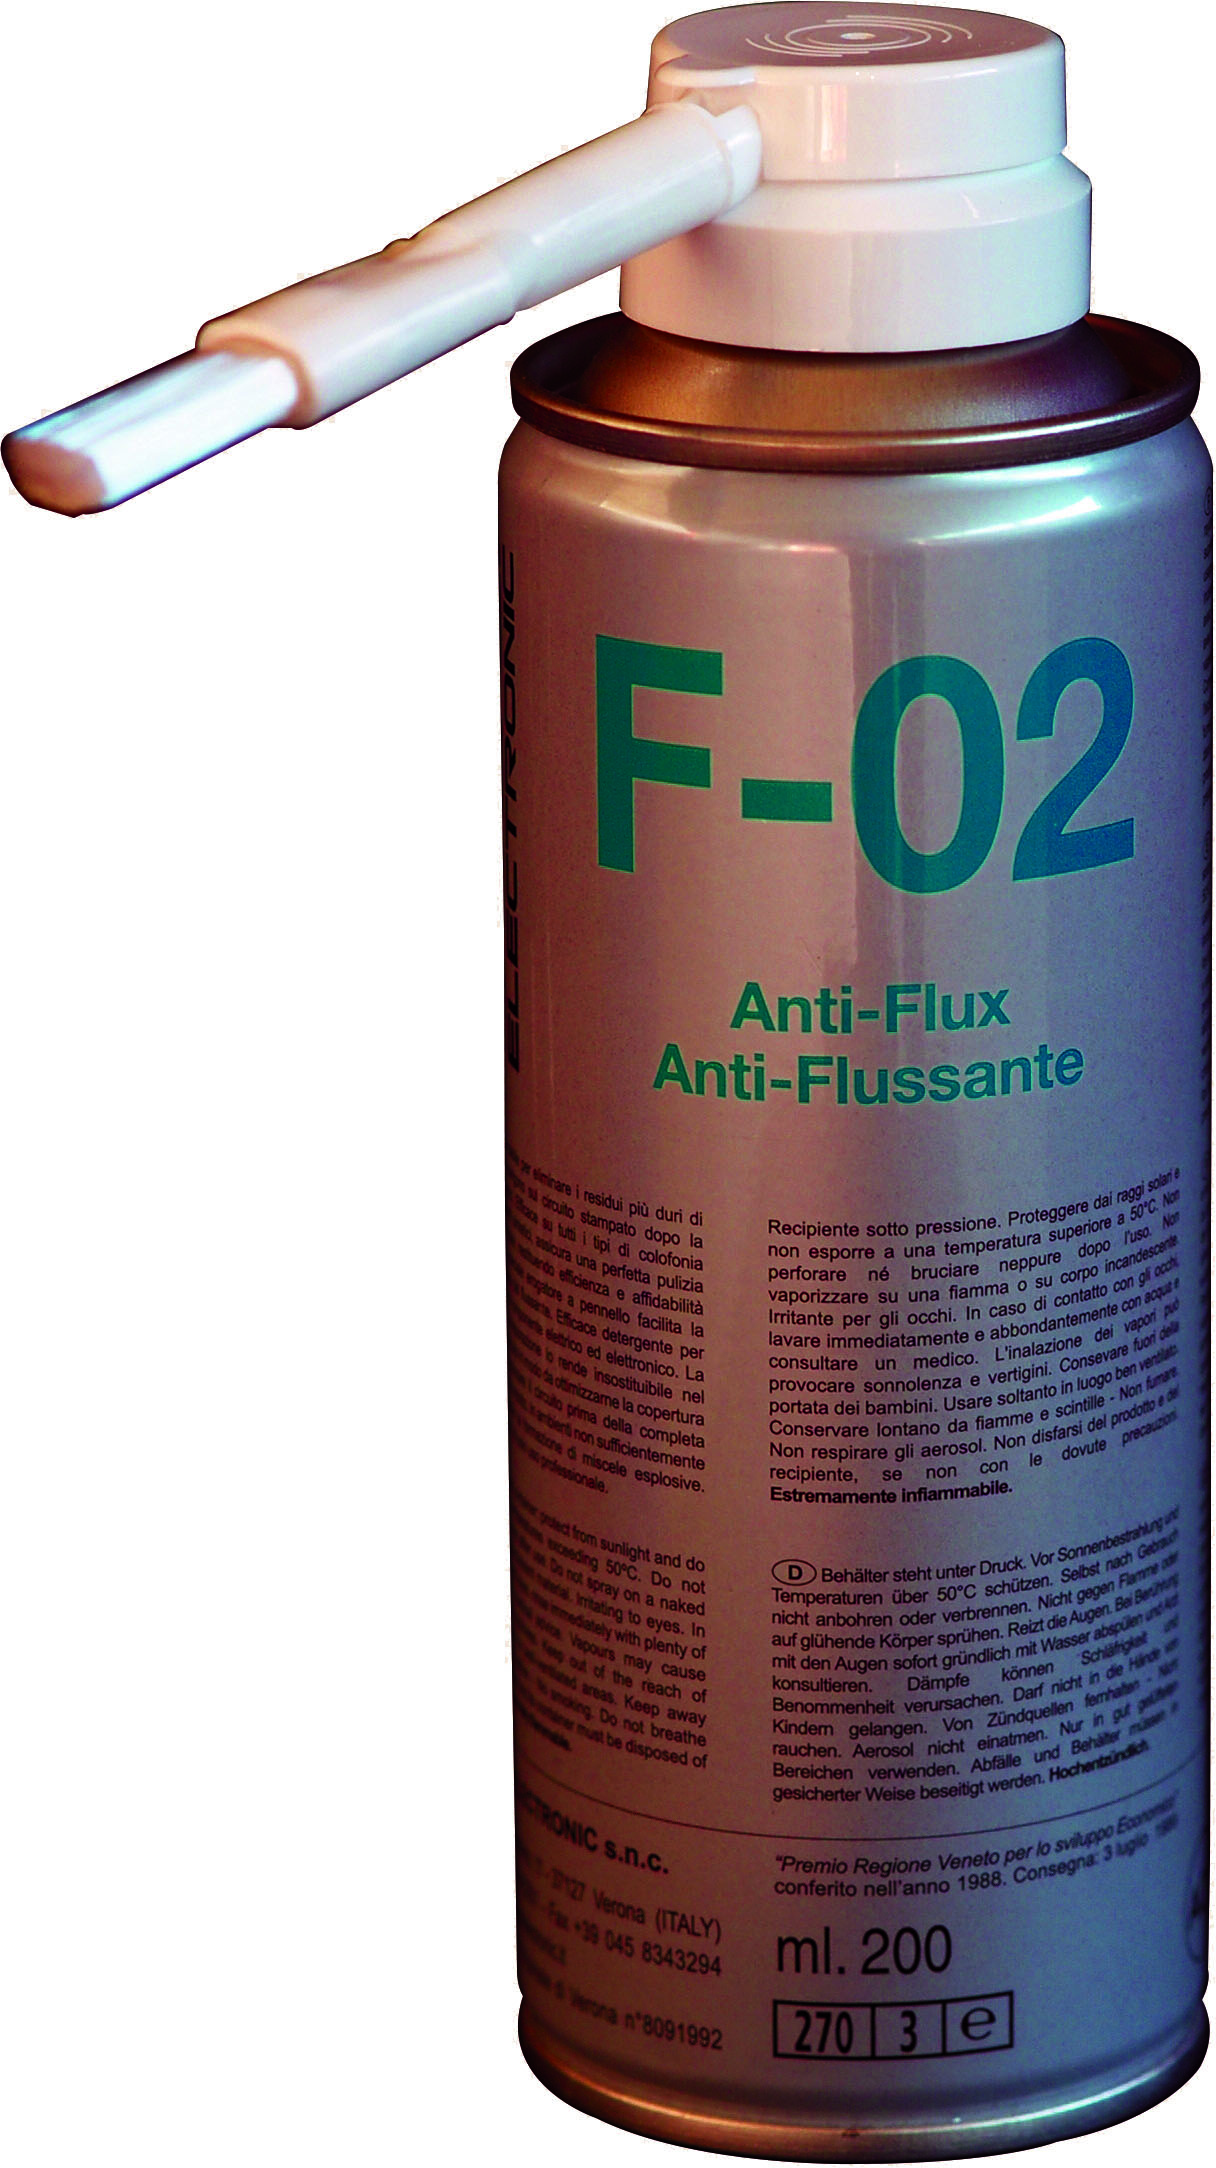 Due-Ci F-02 Anti-Flux Akı Önleyici Sprey 200 ml